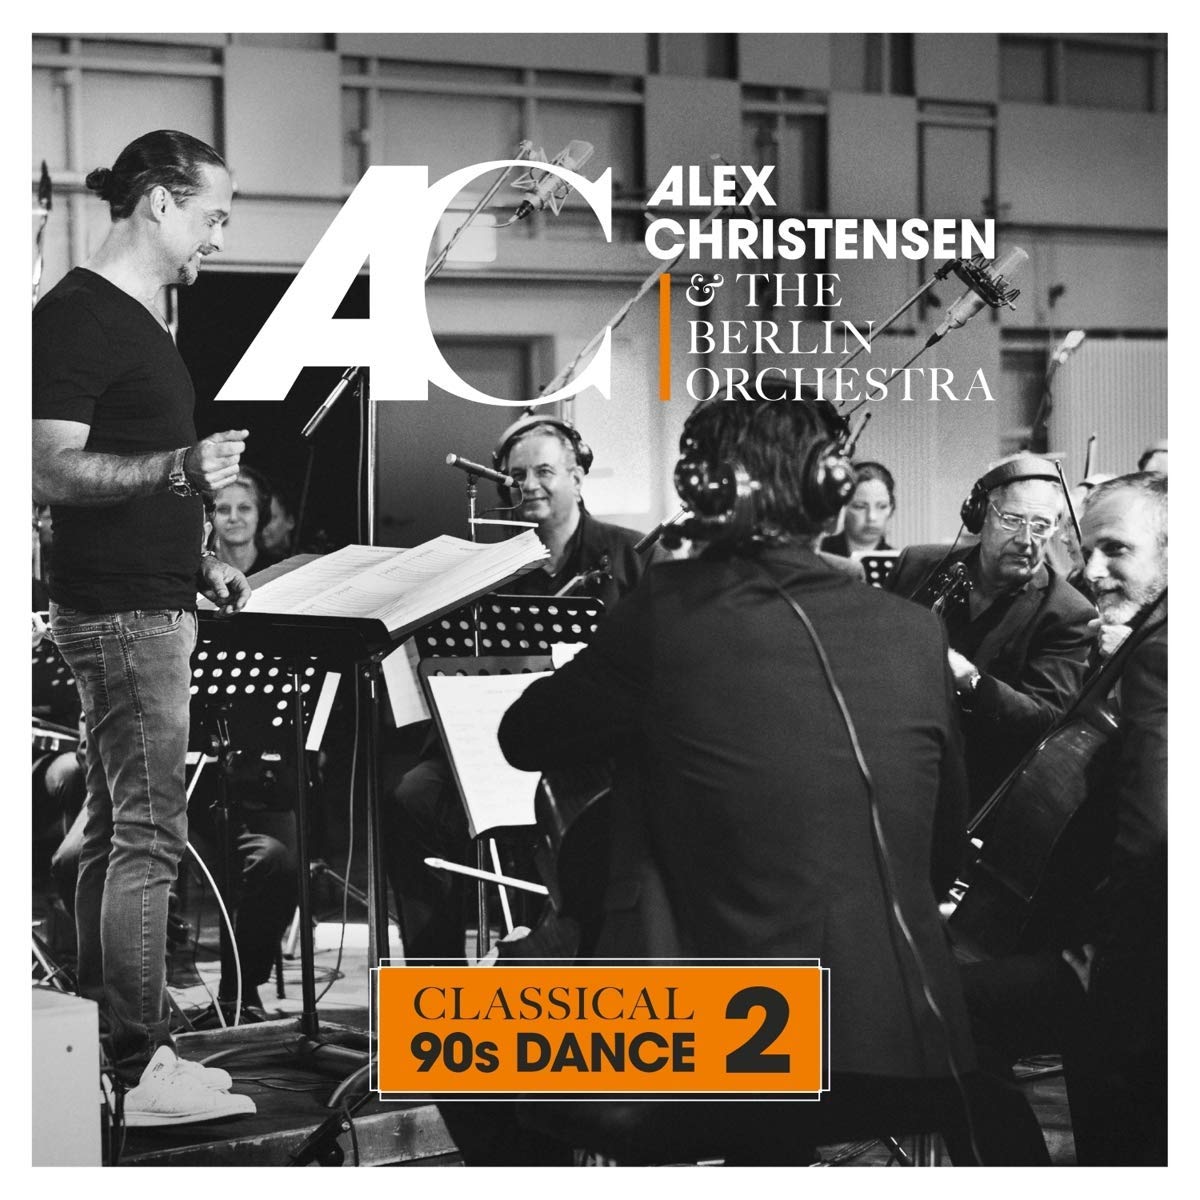 Alex Christensen & The Berlin Orchestra 90’s Dance 2. Dobra muzyka do samochodu. W trasie.